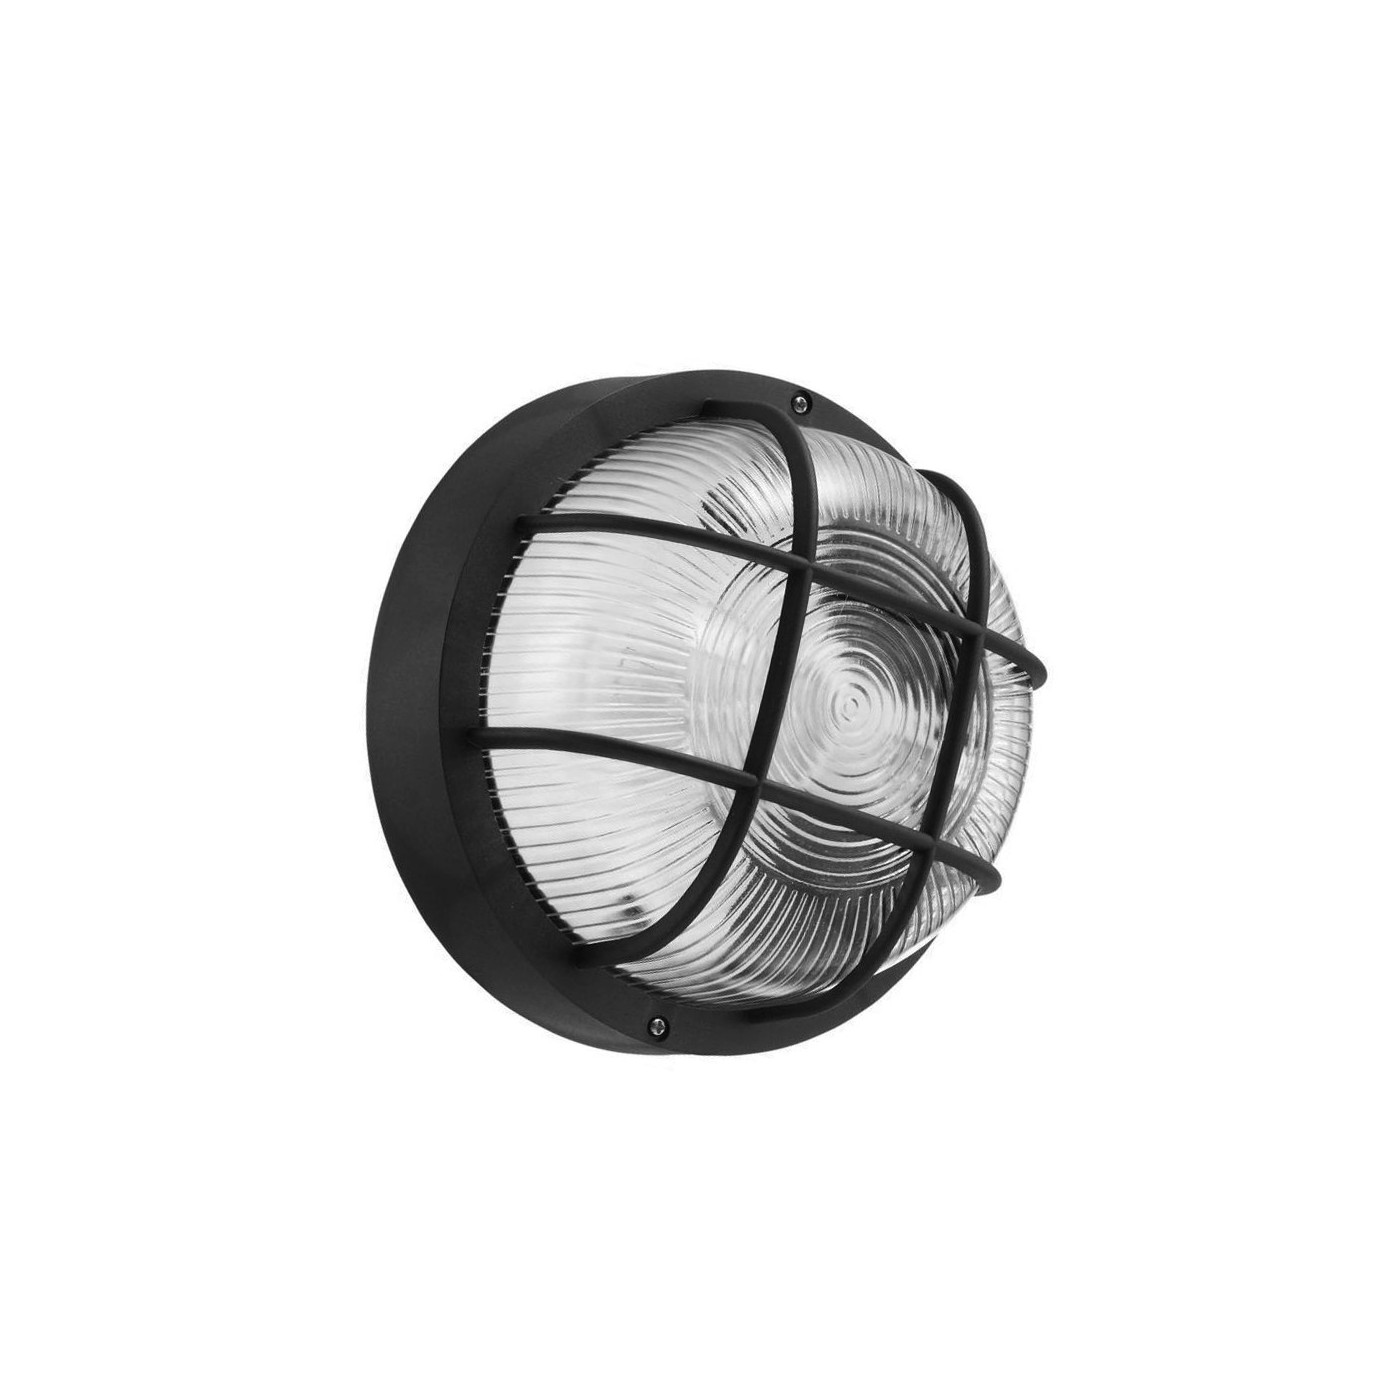 Okrągła lampa zewnętrzna typu bullseye (bulleye), czarna E27